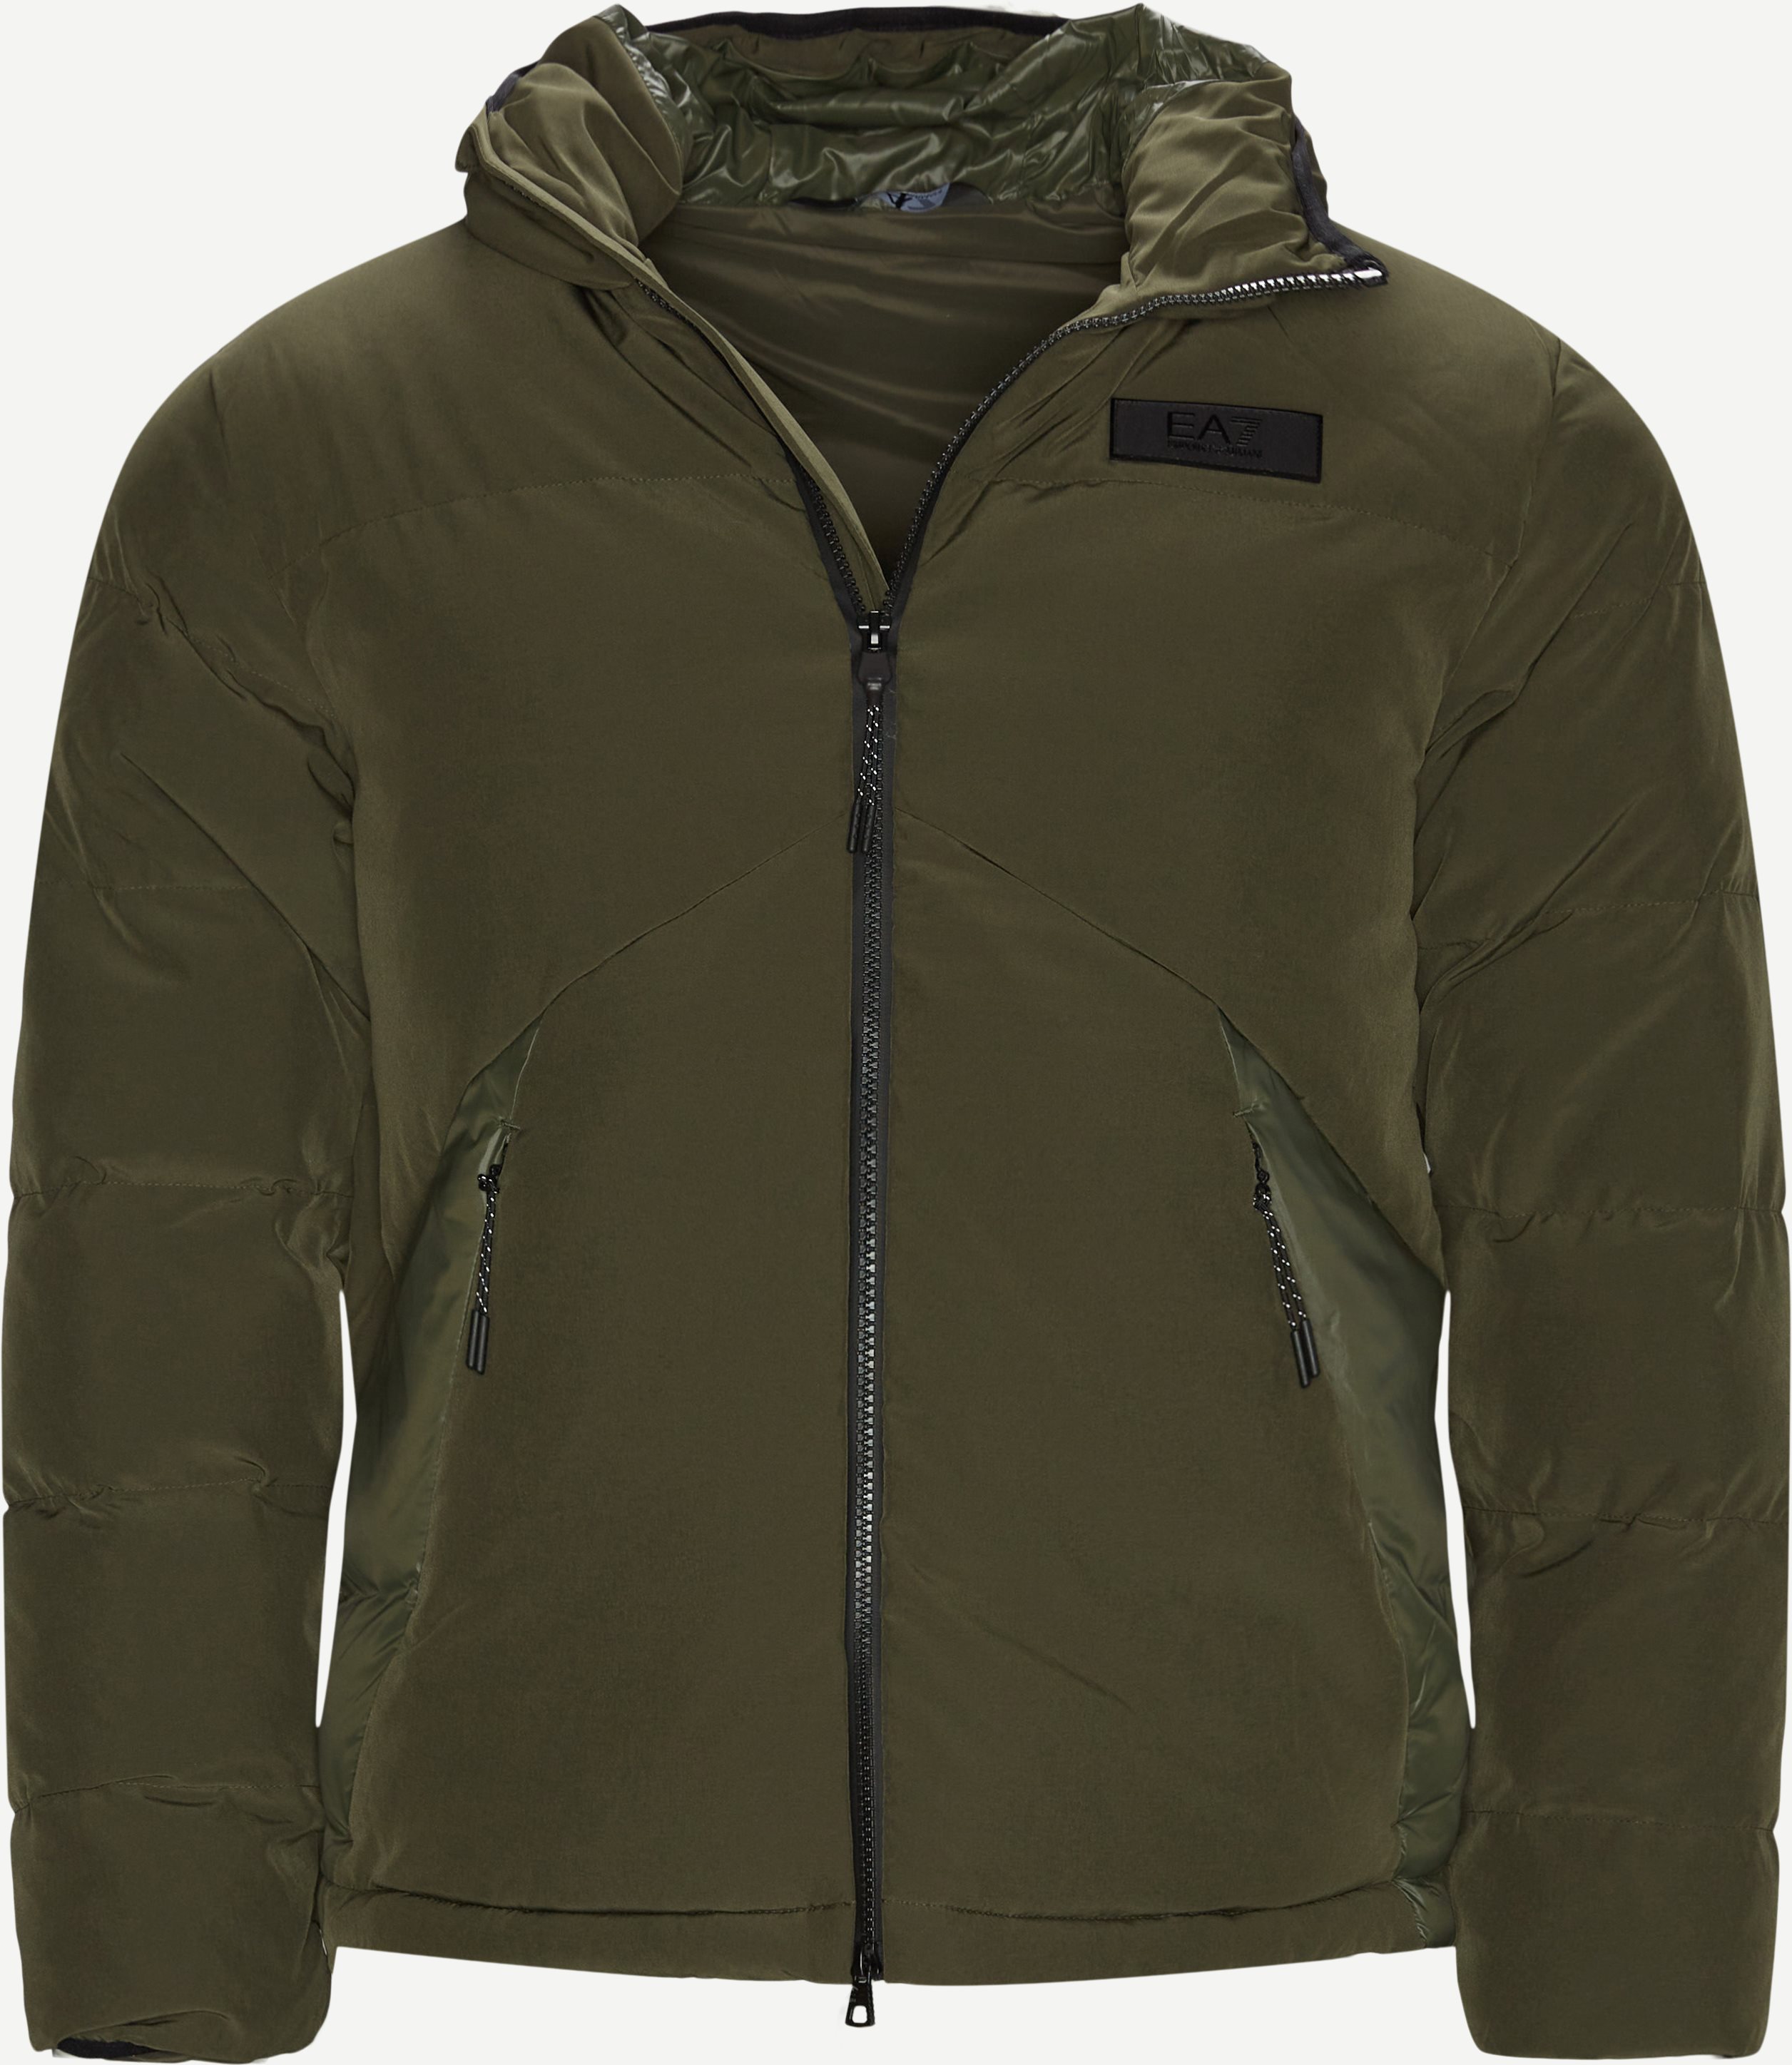 6KPB56 Winter jacket - Jackets - Regular fit - Army